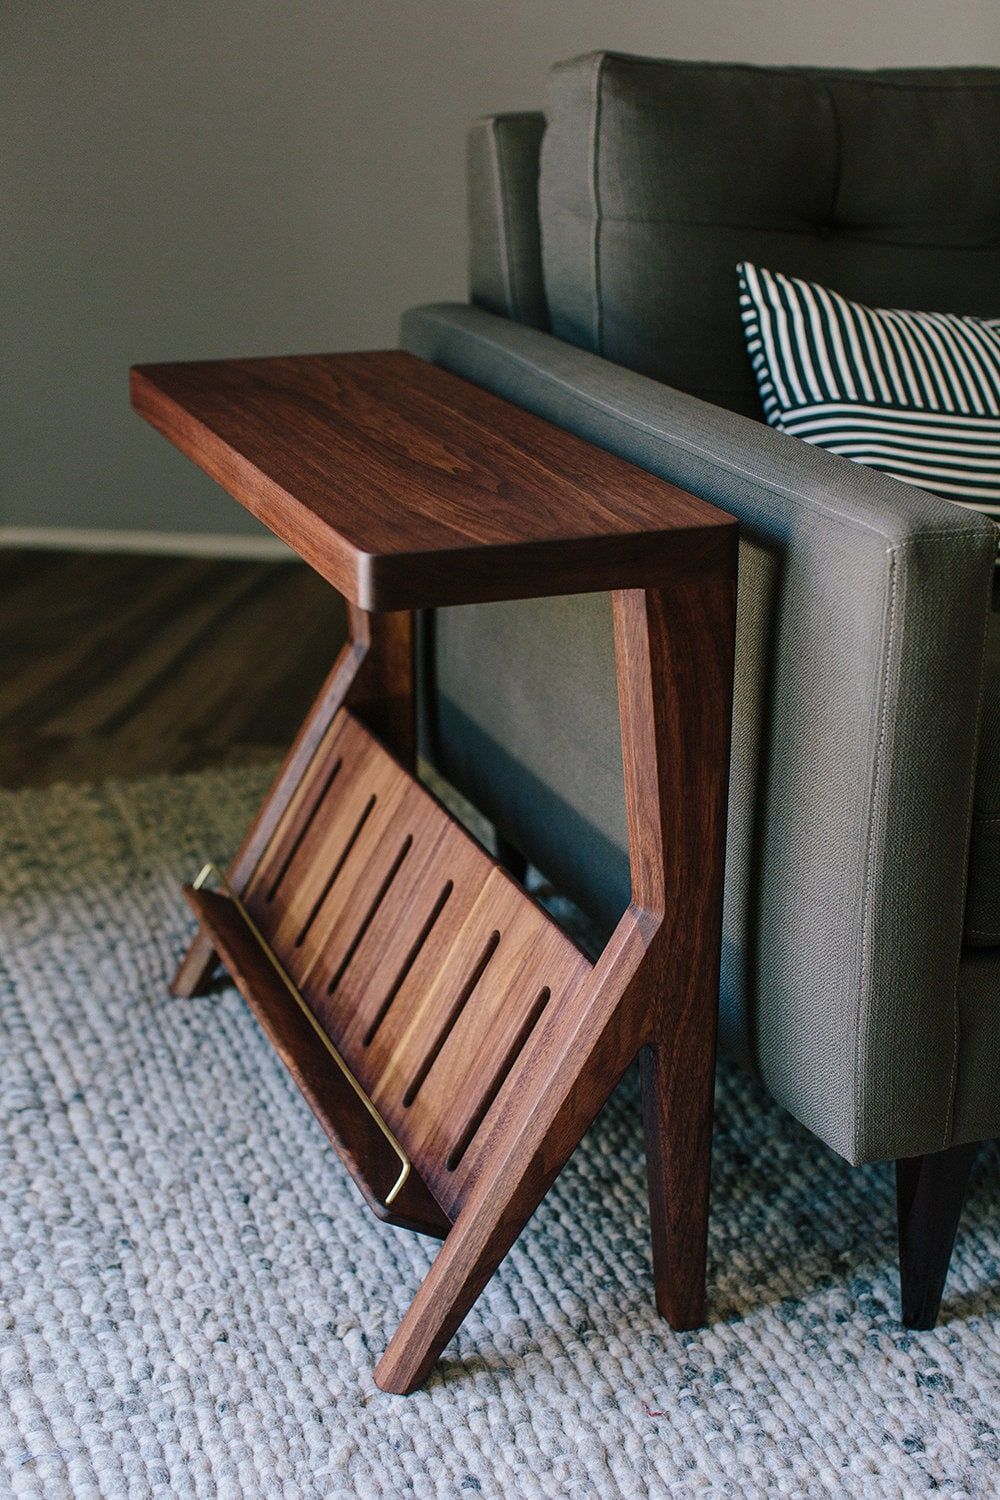 Enhance Your Home Decor with Elegant
Walnut Furniture